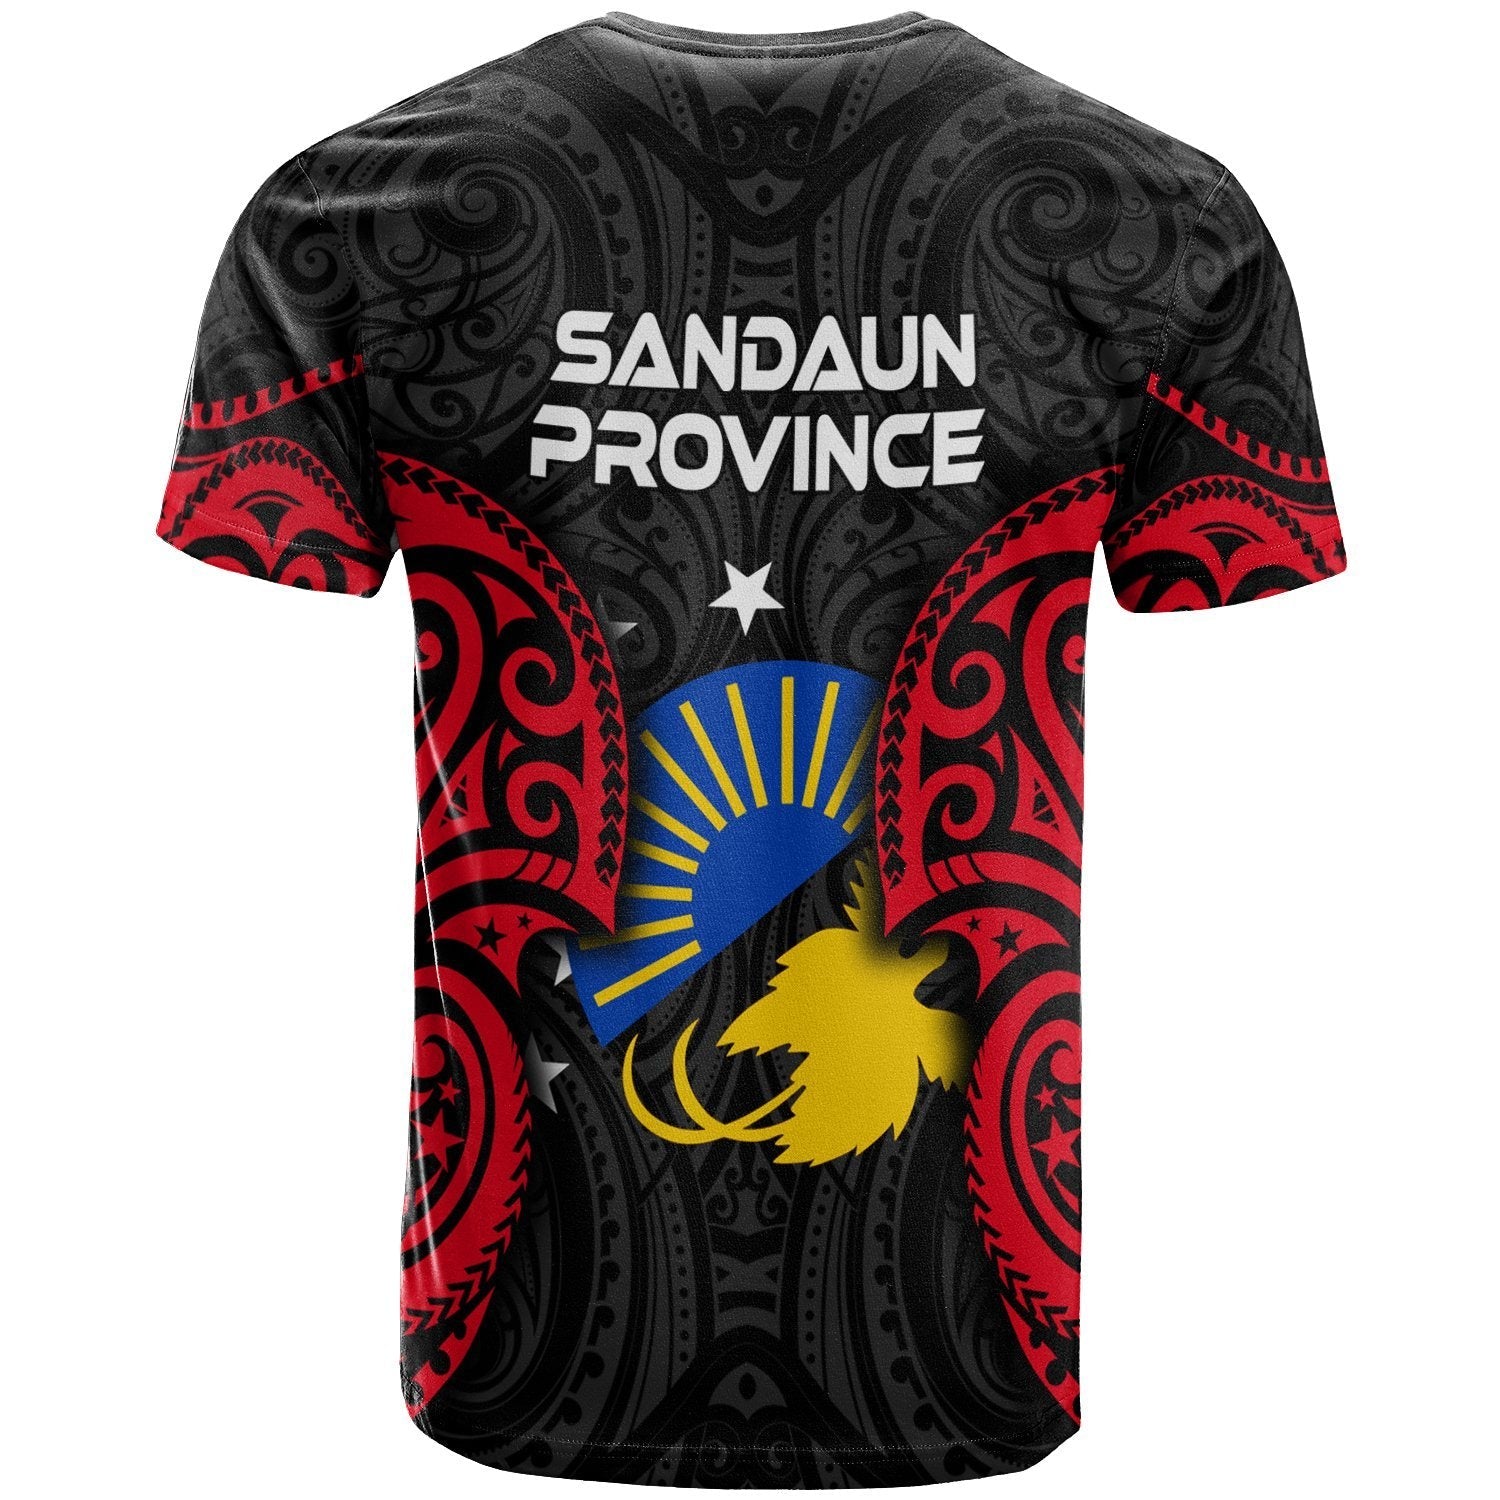 papua-new-guinea-sandaun-province-polynesian-t-shirt-spirit-version